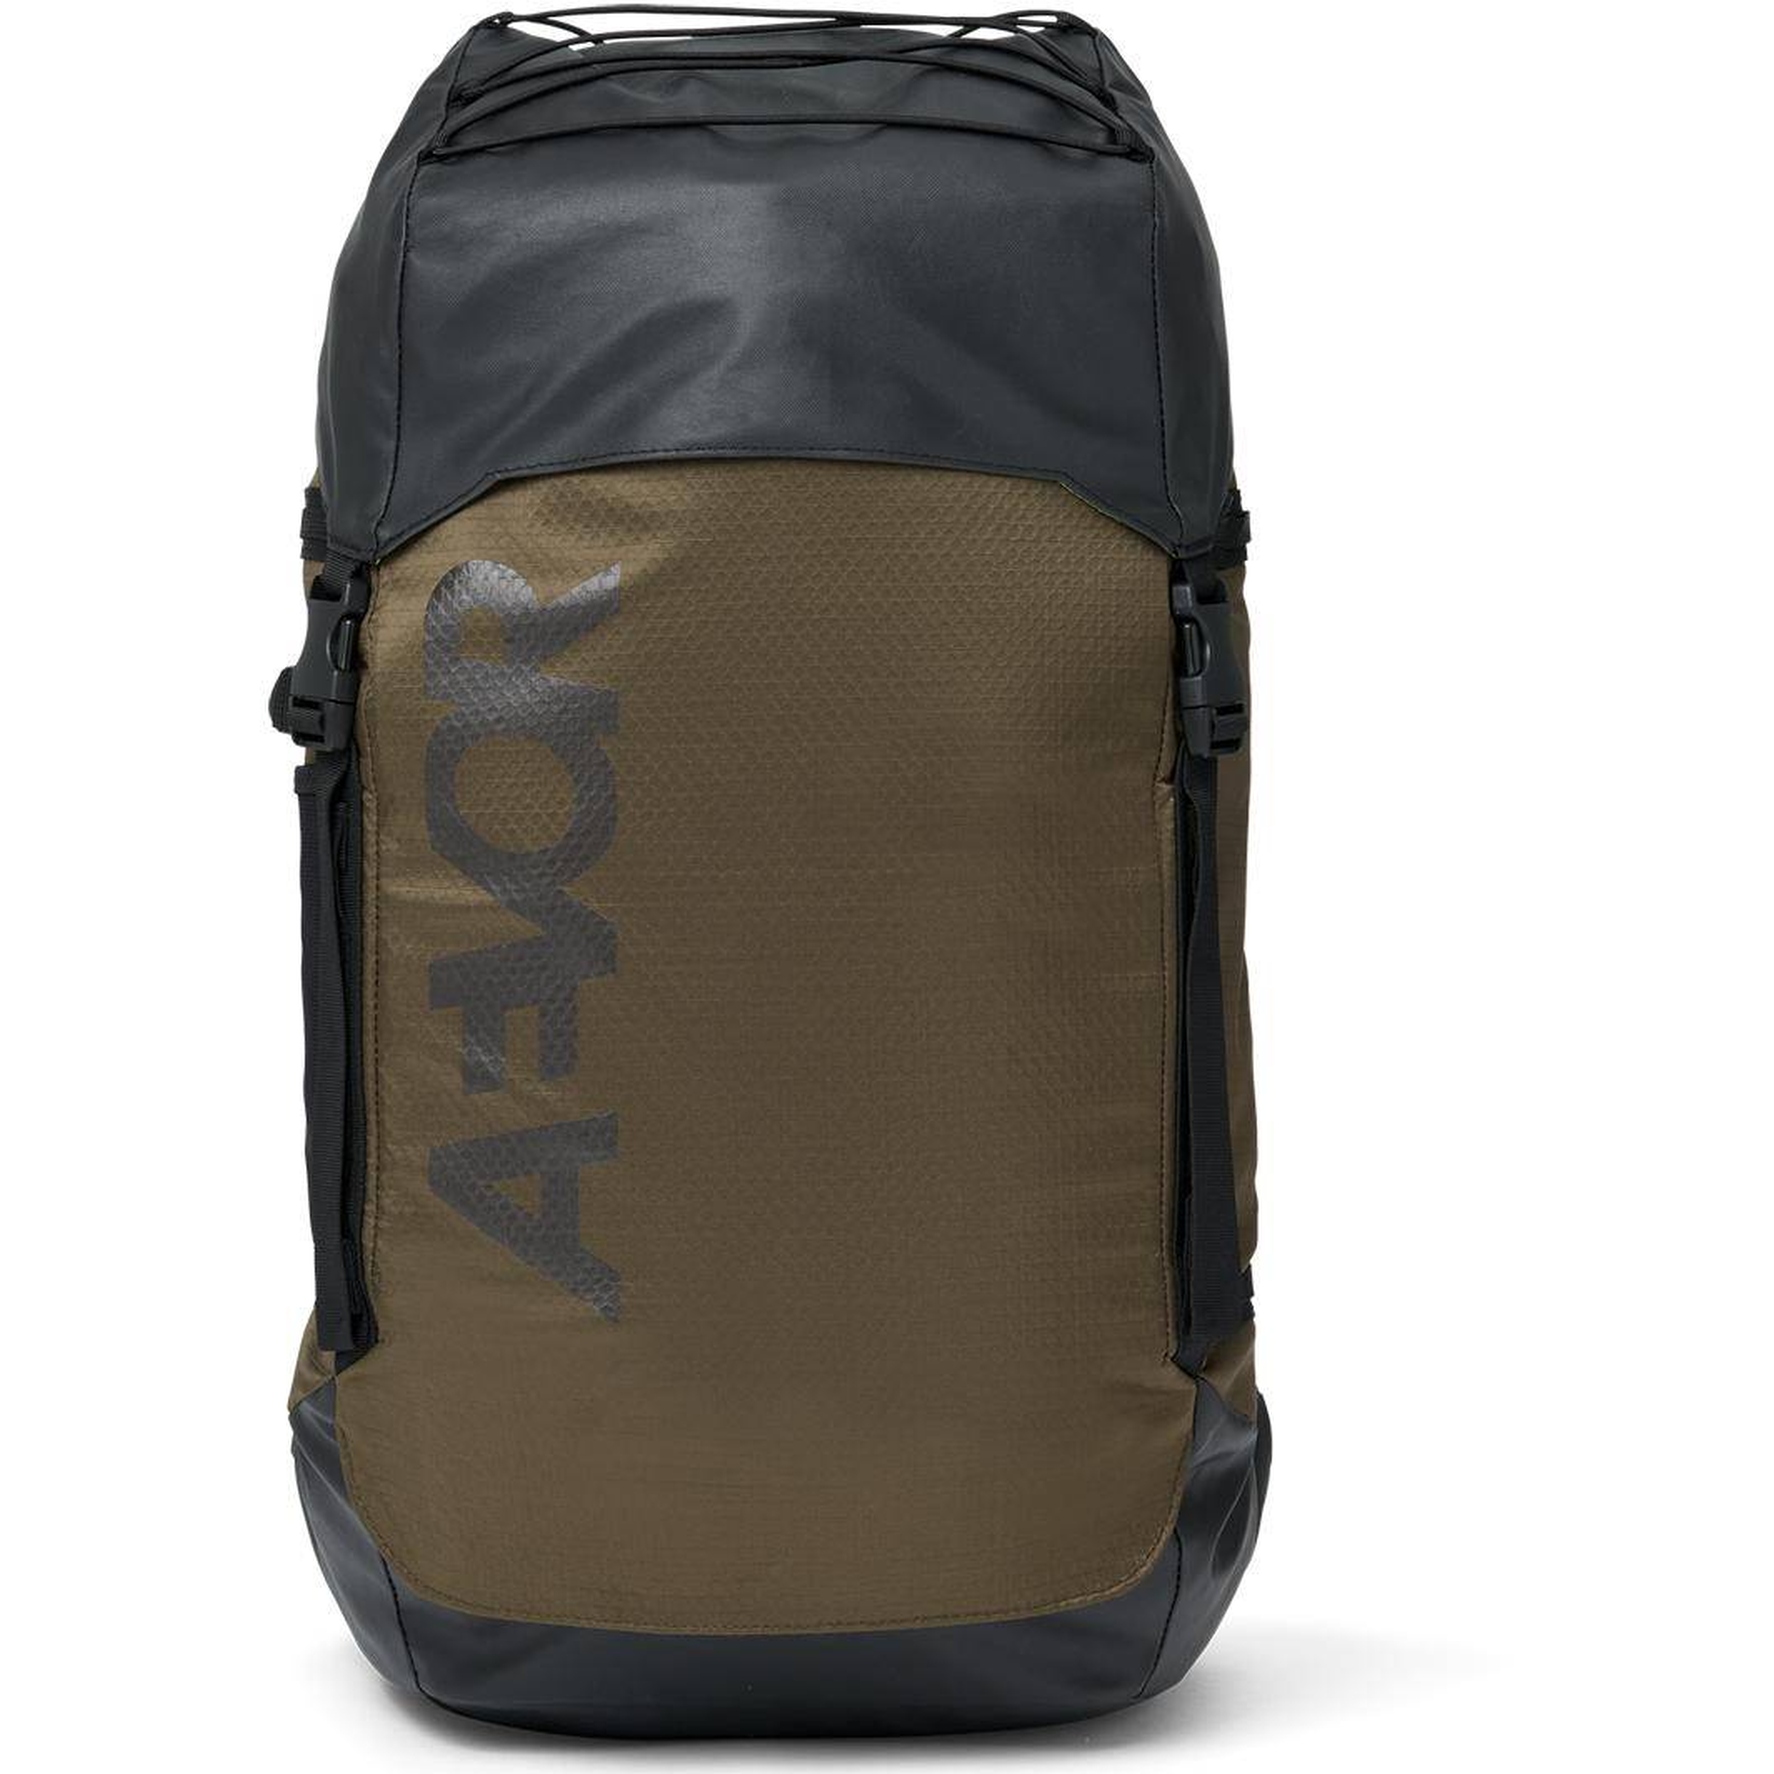 Produktbild von AEVOR Explore Bike Pack Rucksack - Proof Olive Gold